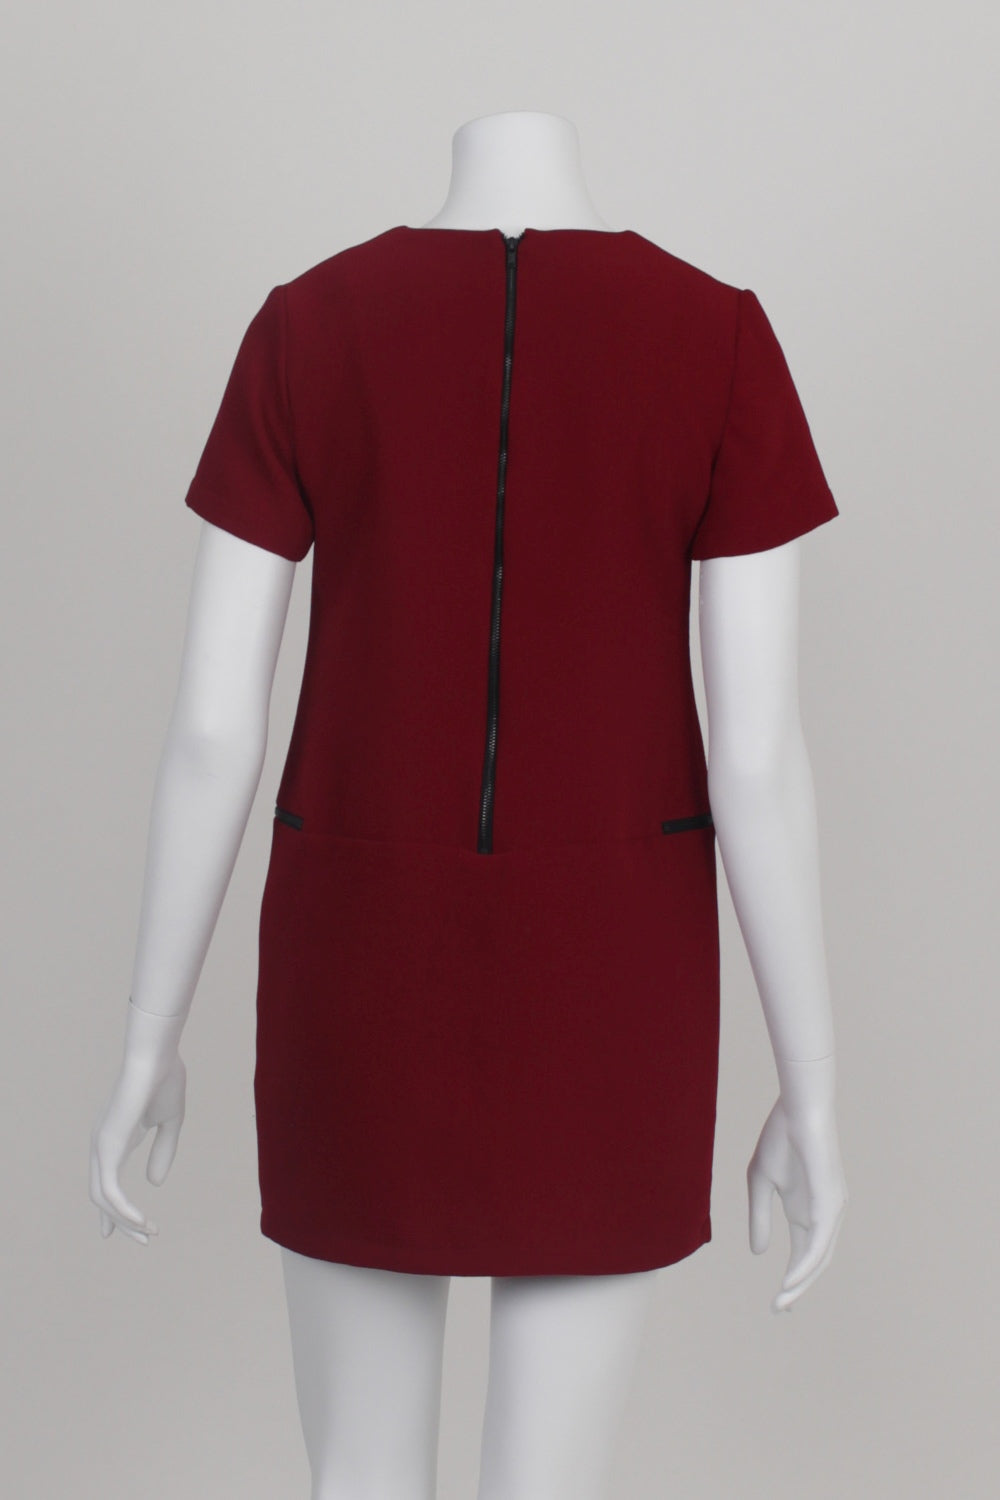 Topshop Petite Burgundy Short Sleeve Dress 8